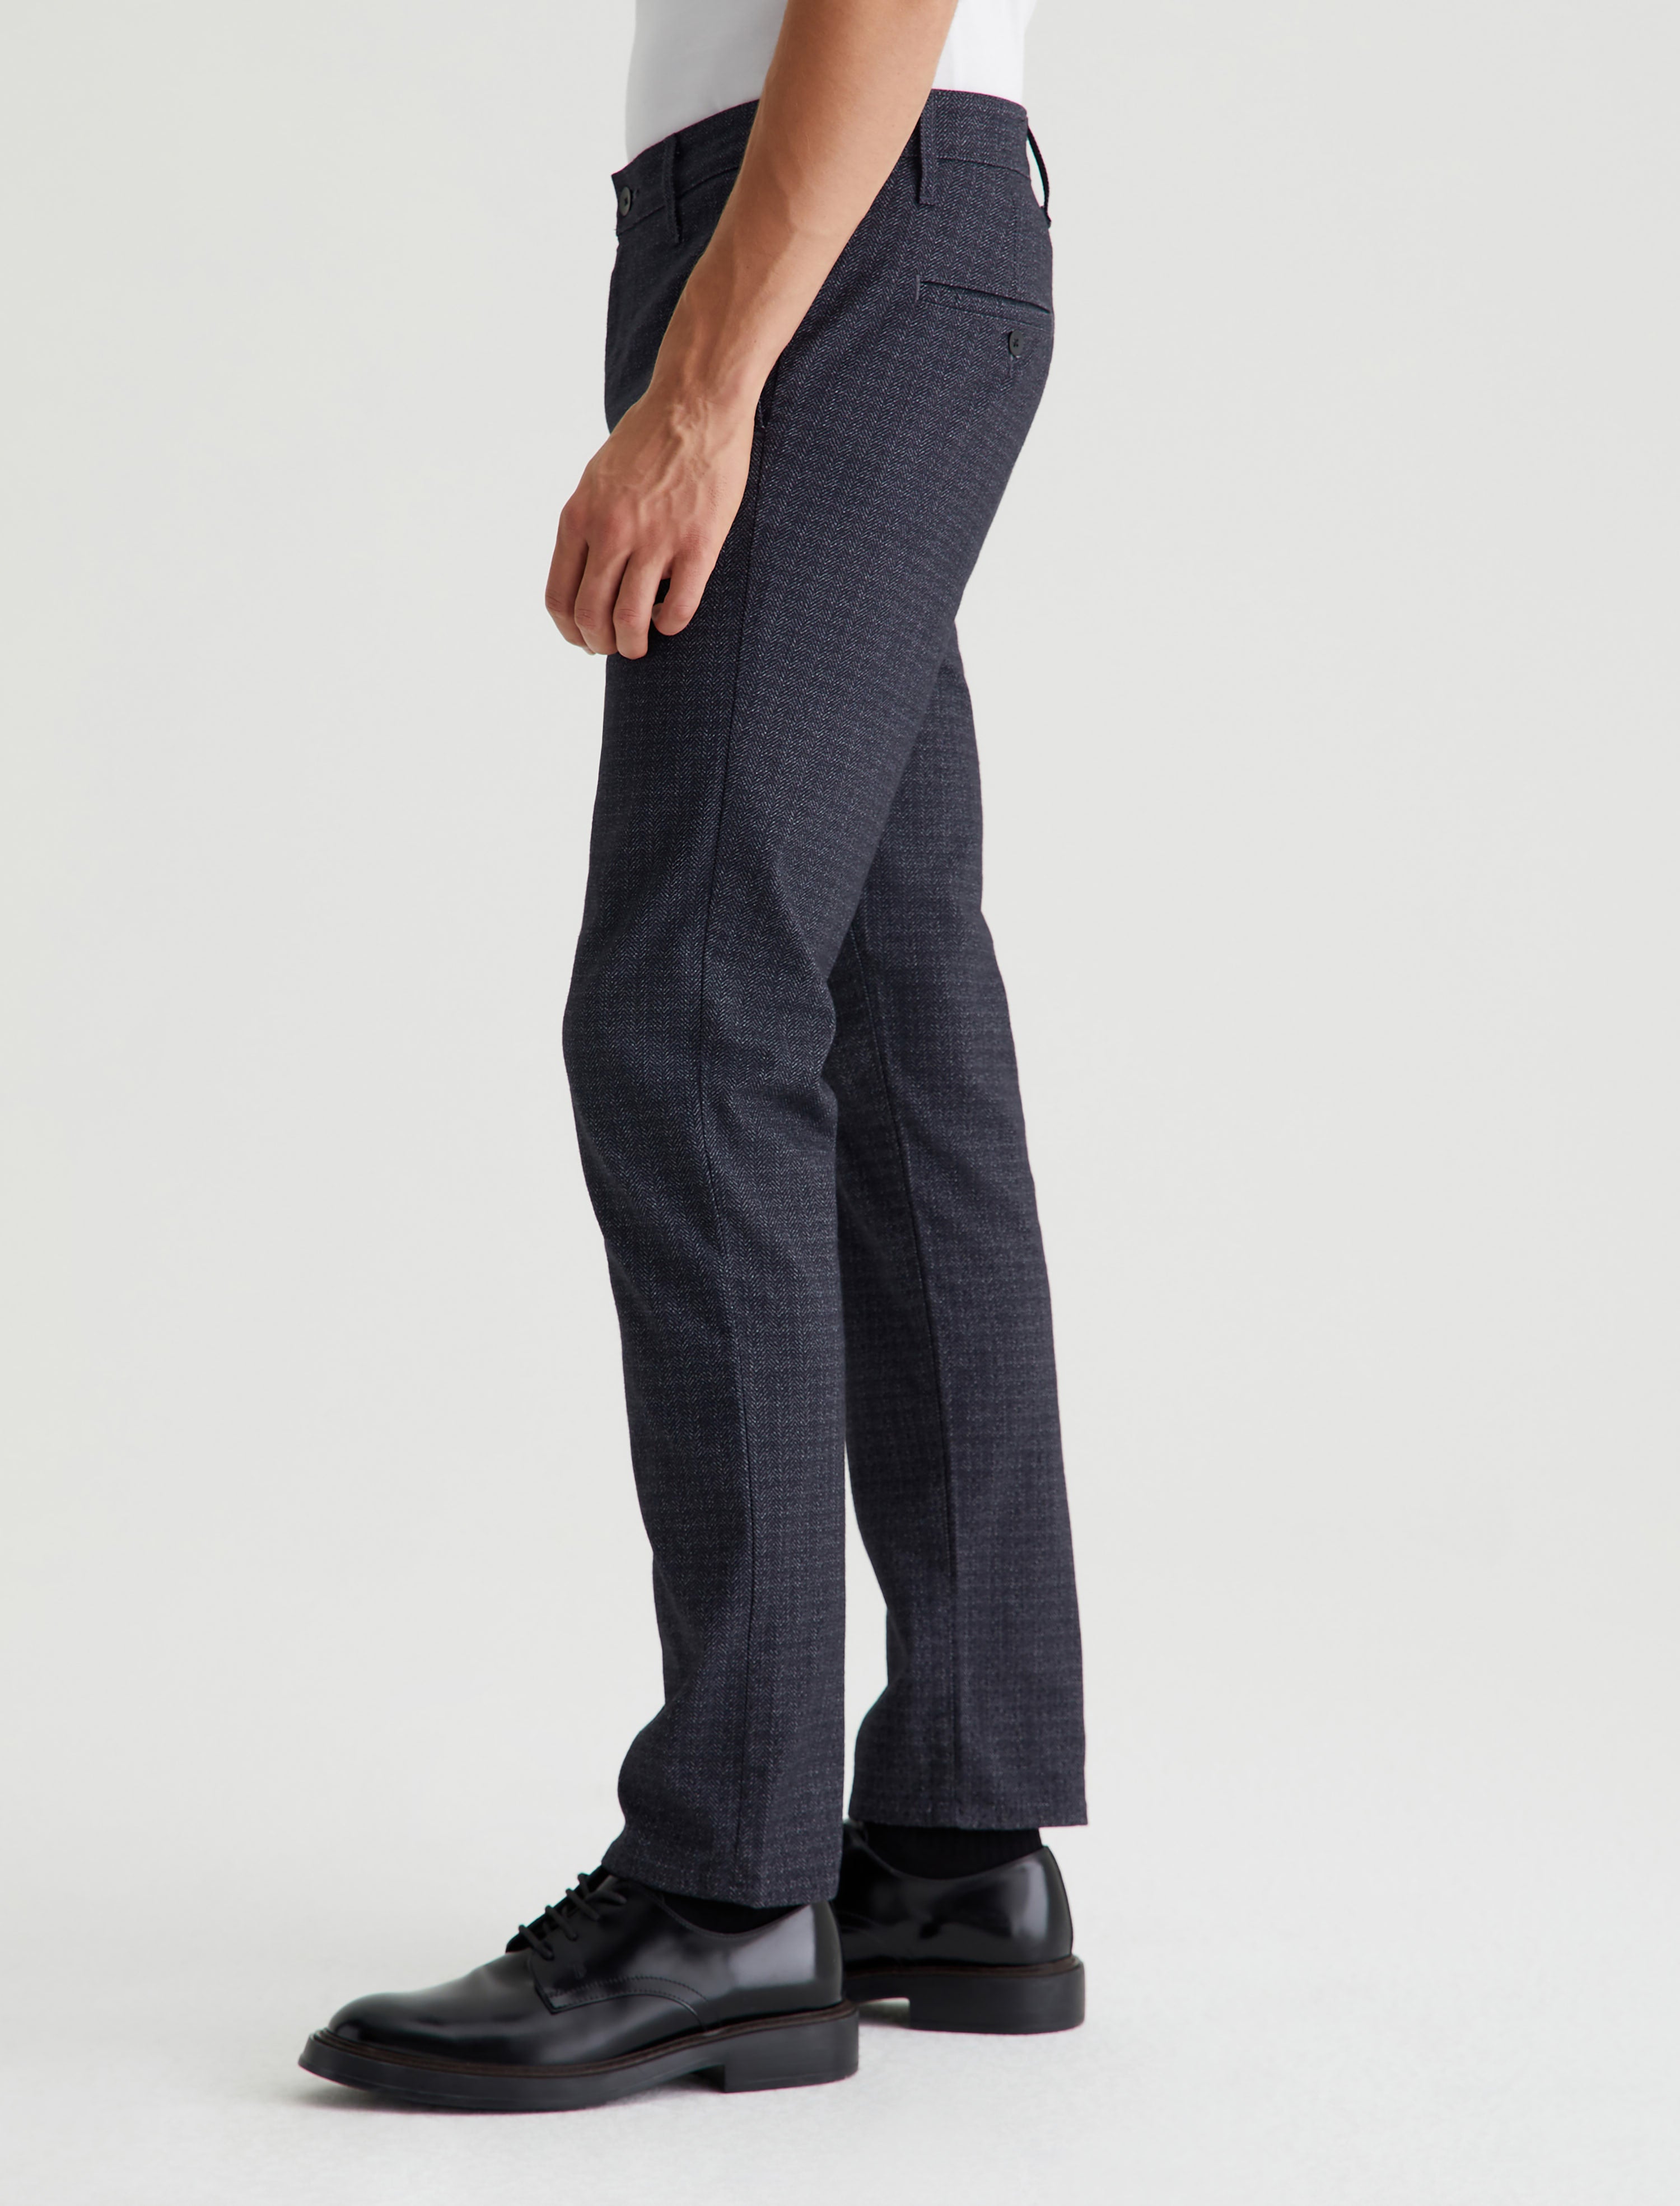 Men Kullen Delorean Black/Grey at AG Jeans Official Store